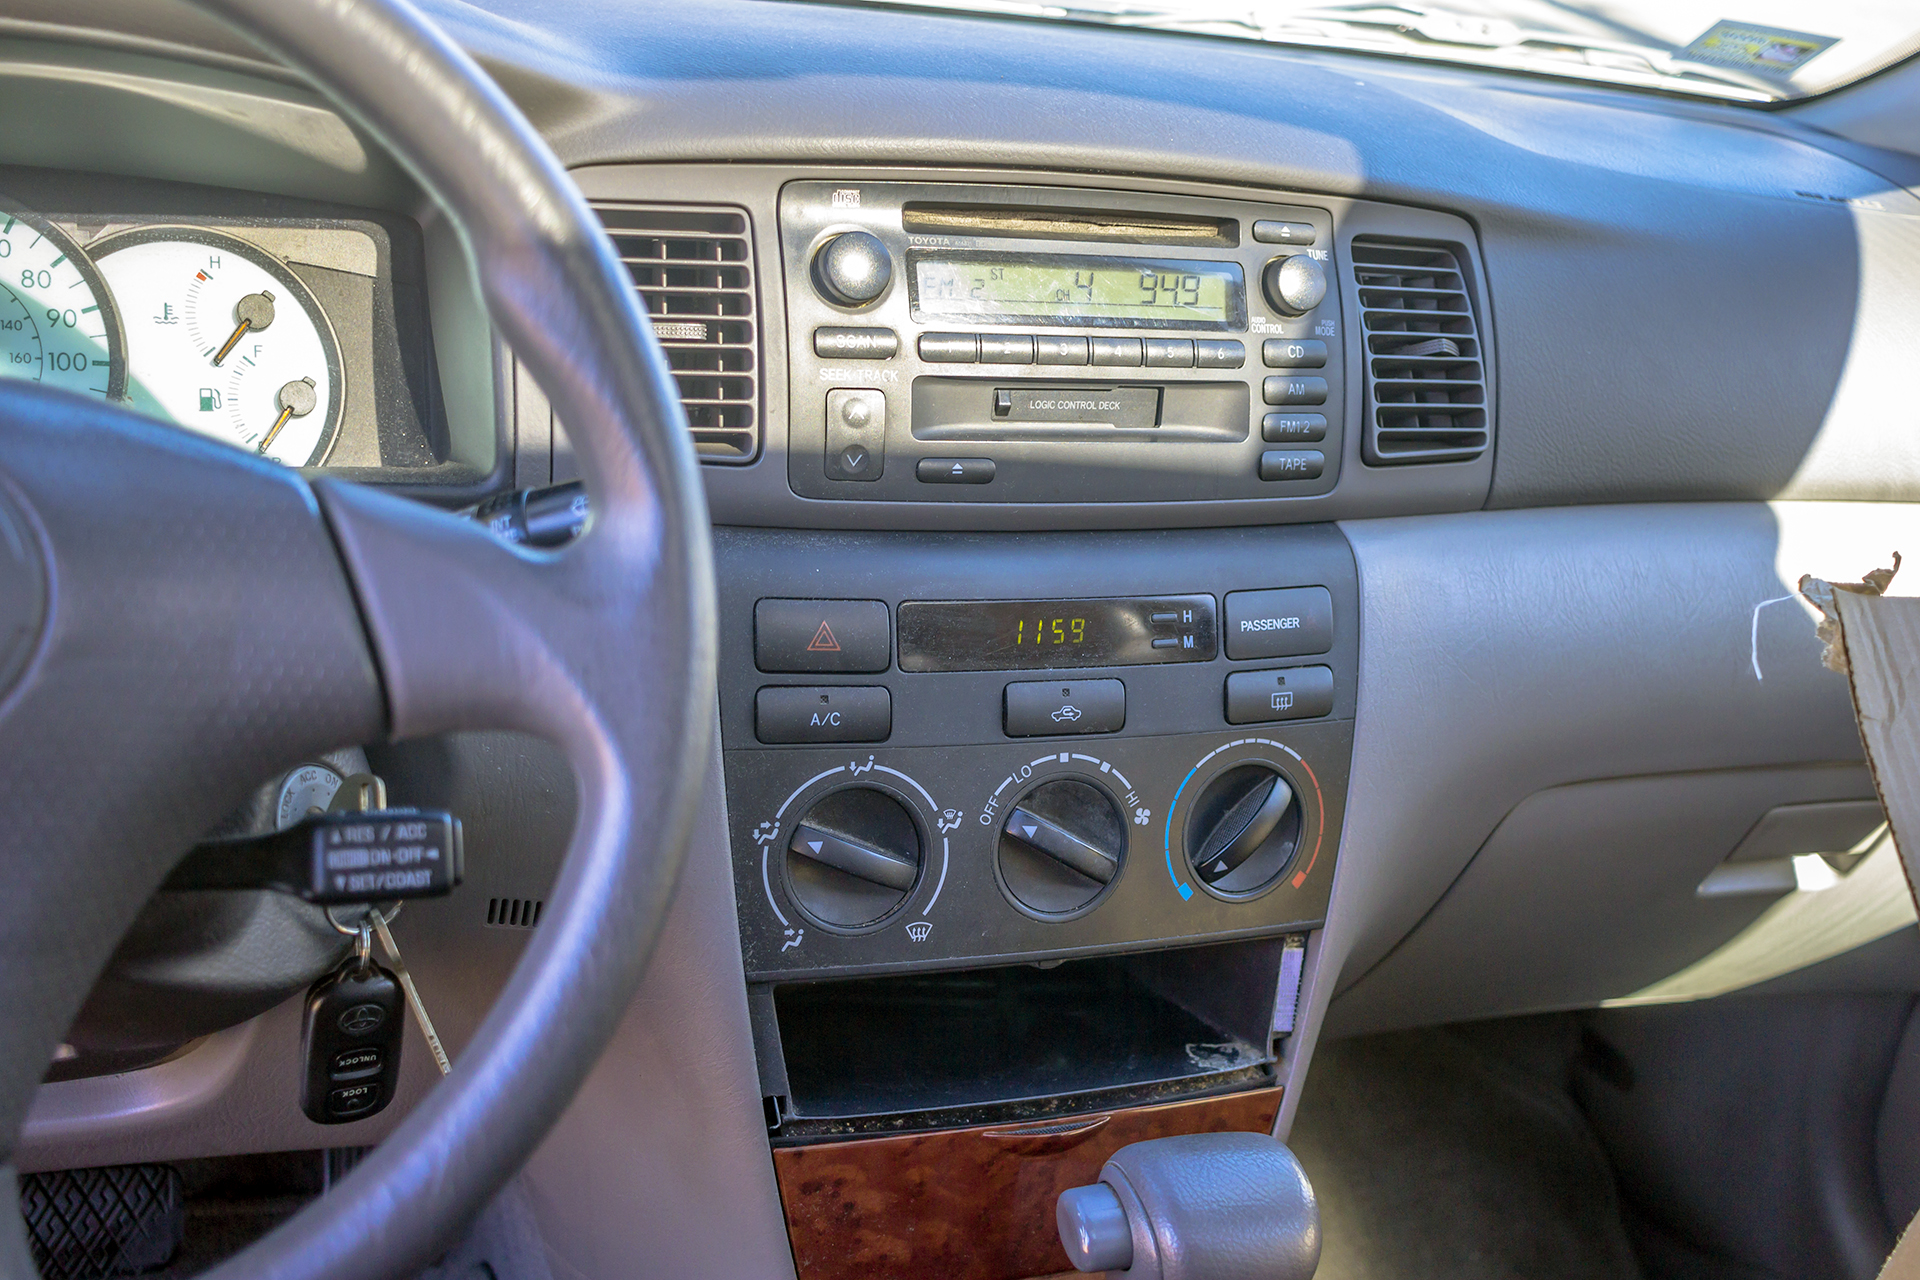 2004 Toyota Corolla Factory Radio.jpg